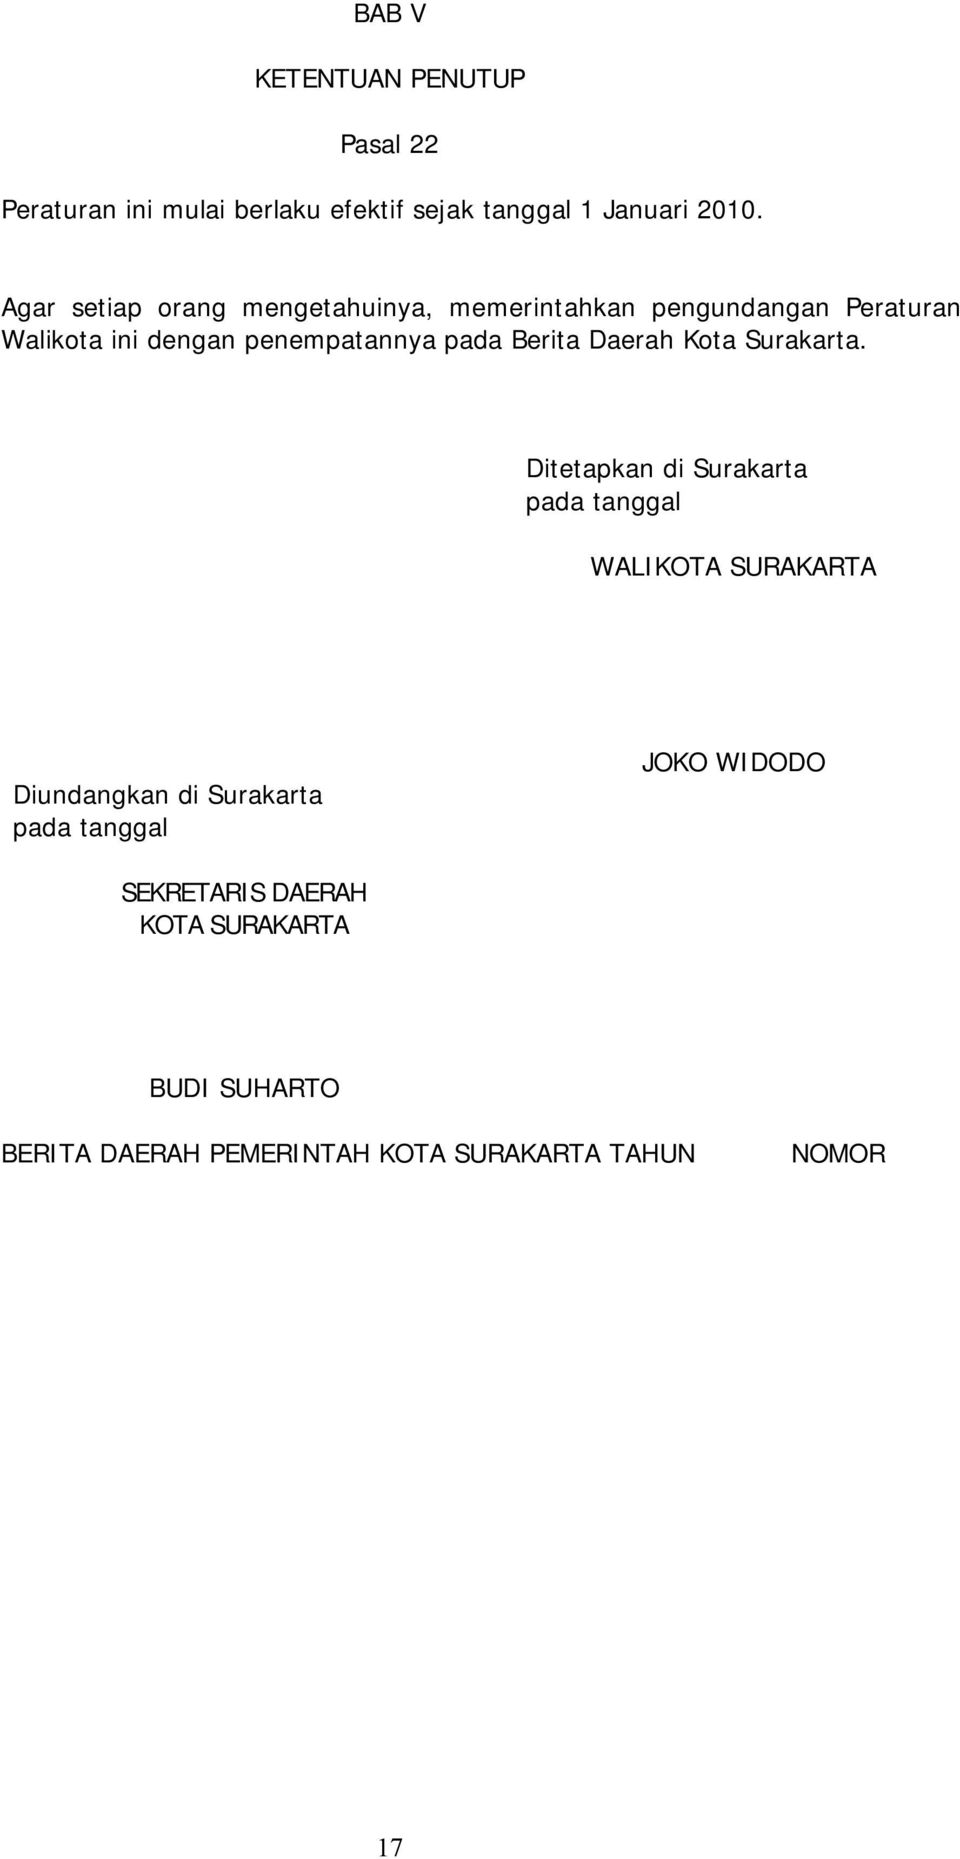 Berita Daerah Kota Surakarta.